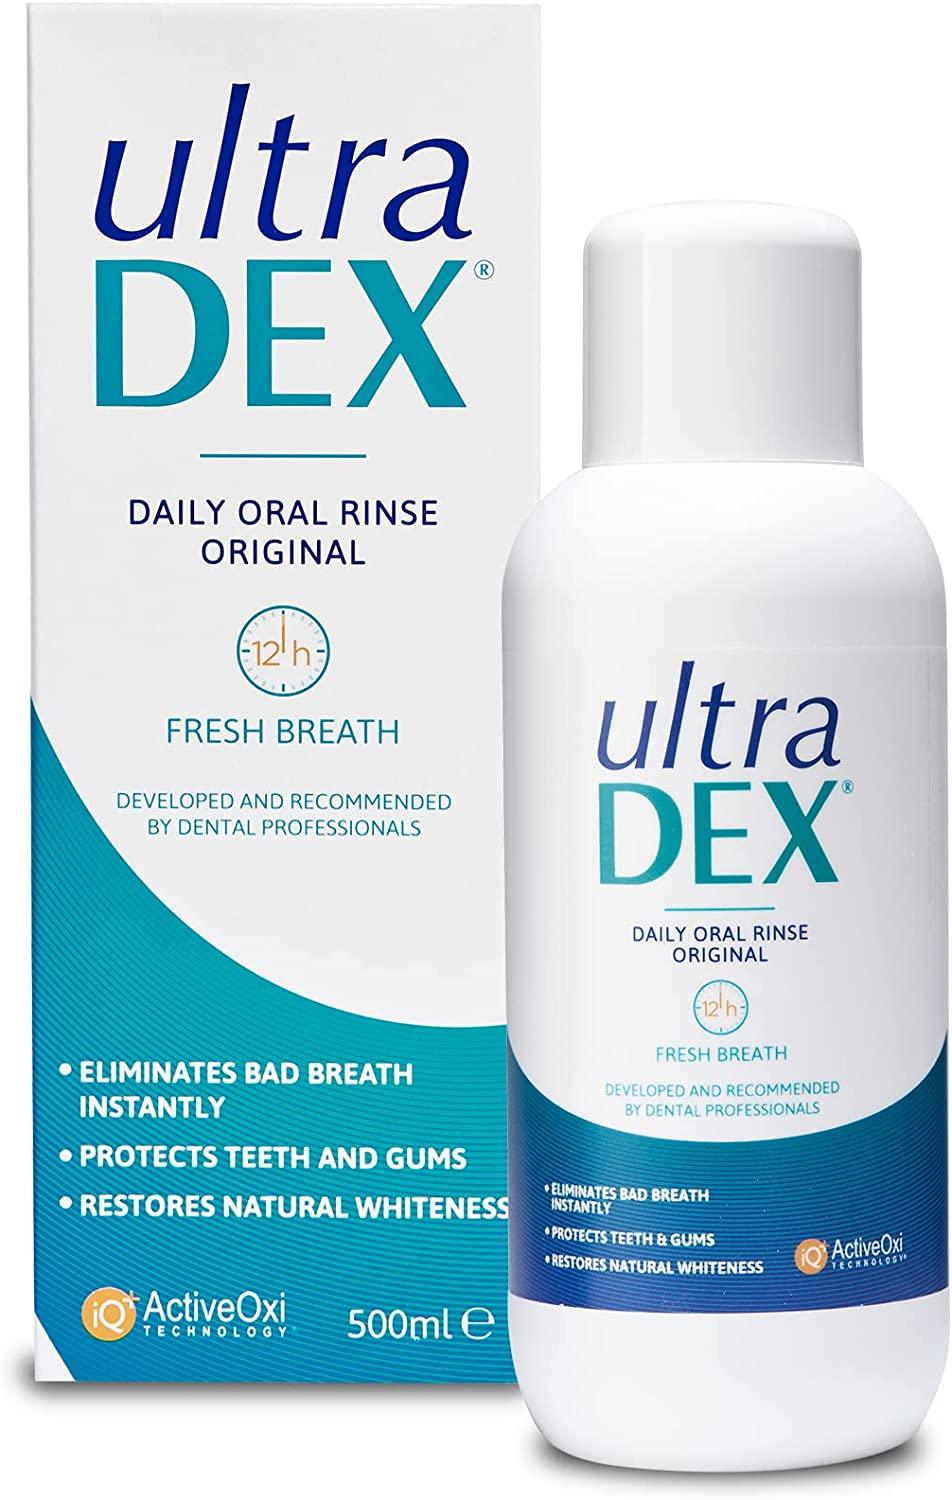 UltraDEX Daily Oral Rinse Original - welzo